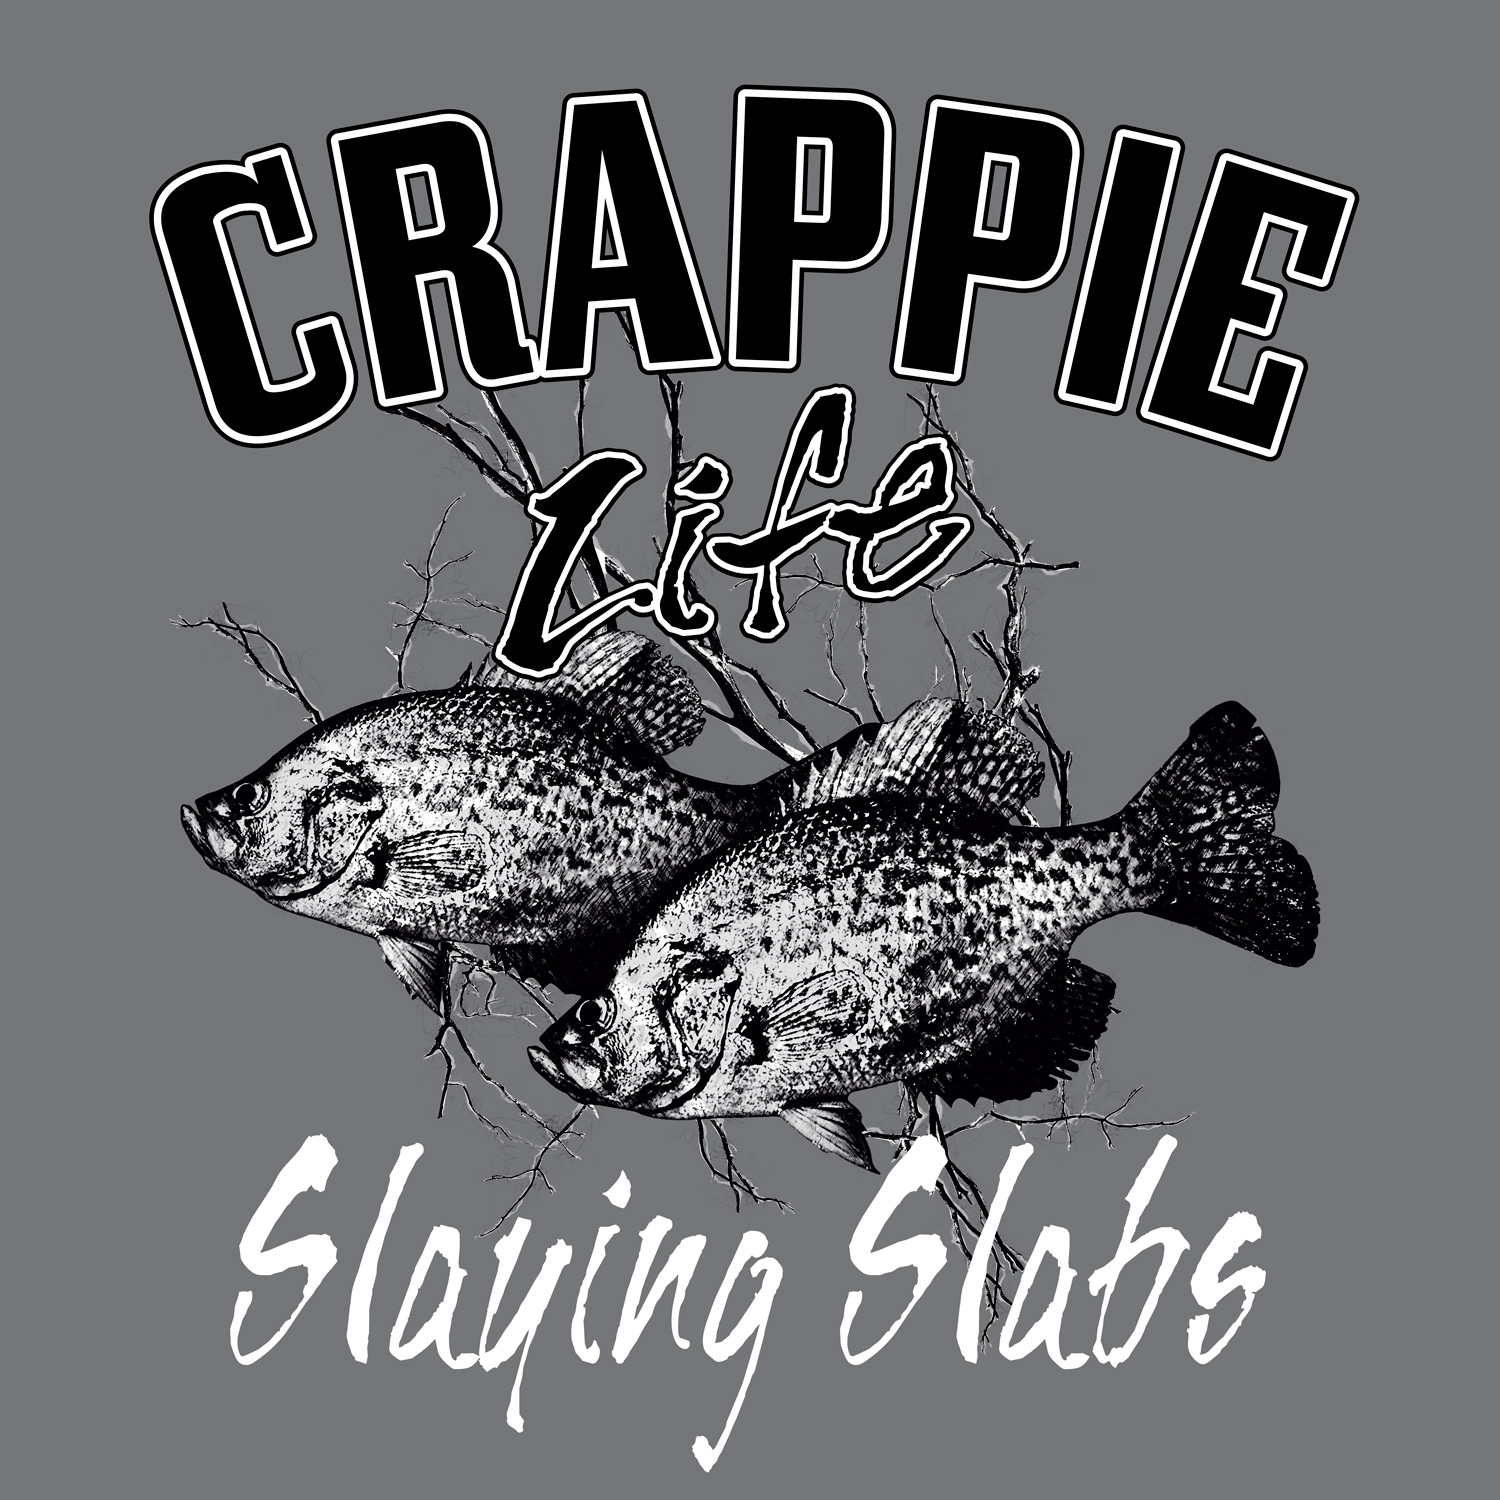 Crappie Whisperer, crappie fishing' Men's T-Shirt